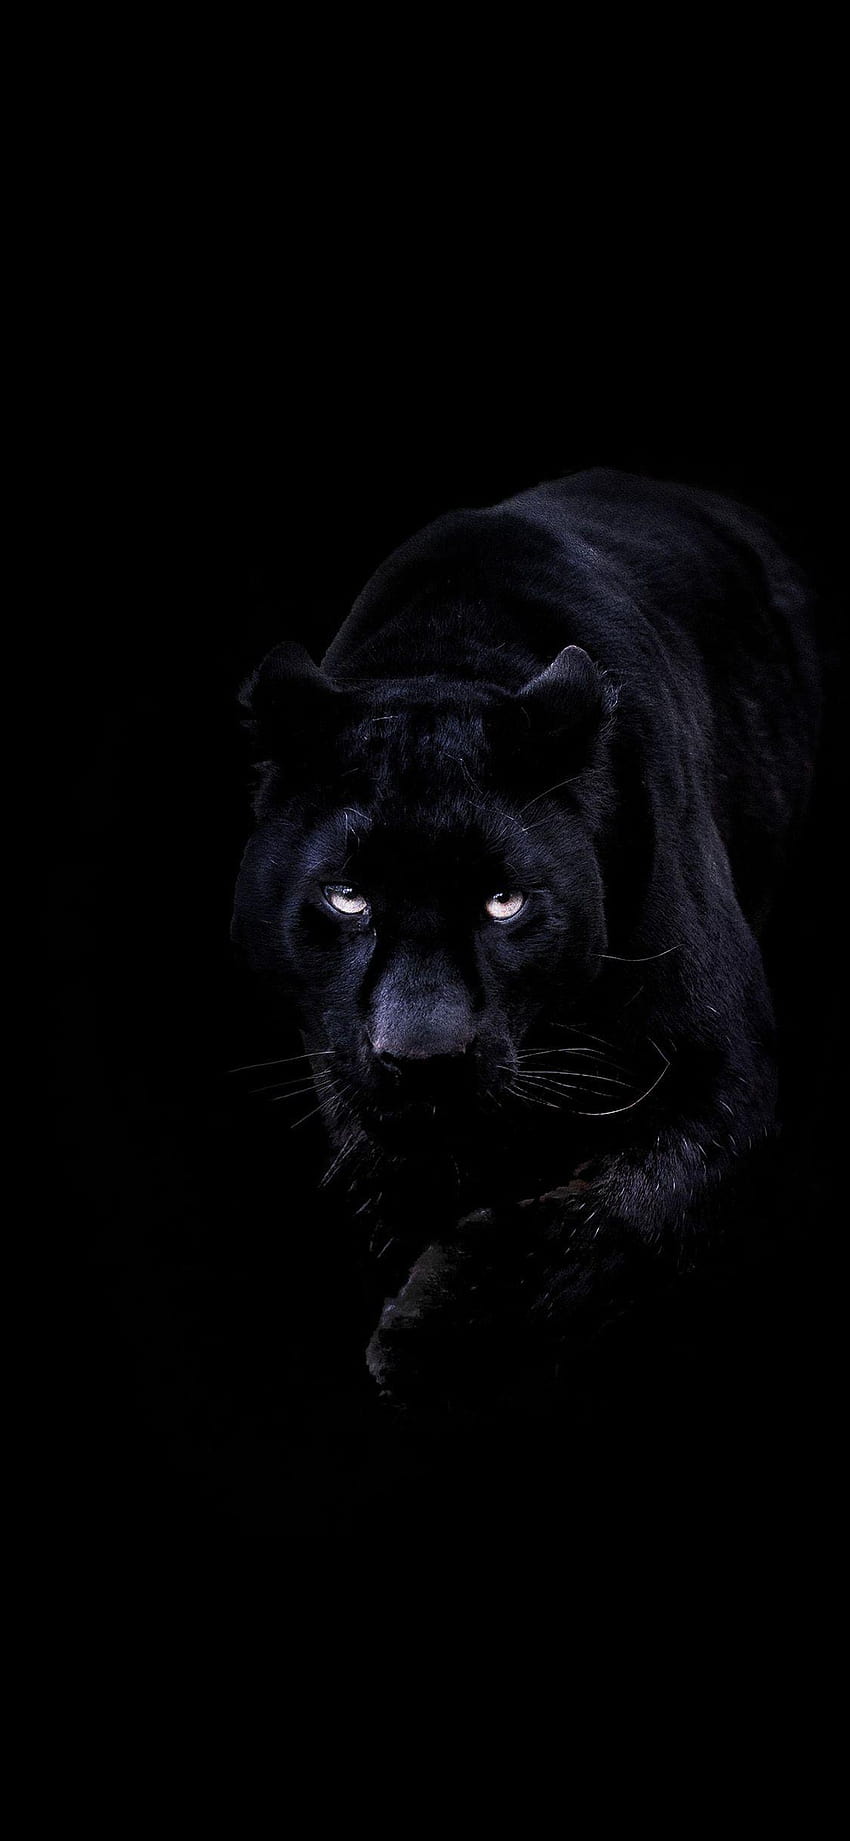 balu prasad に 2019 年のダーク ブラック、黒いジャガーの動物モバイル HD電話の壁紙